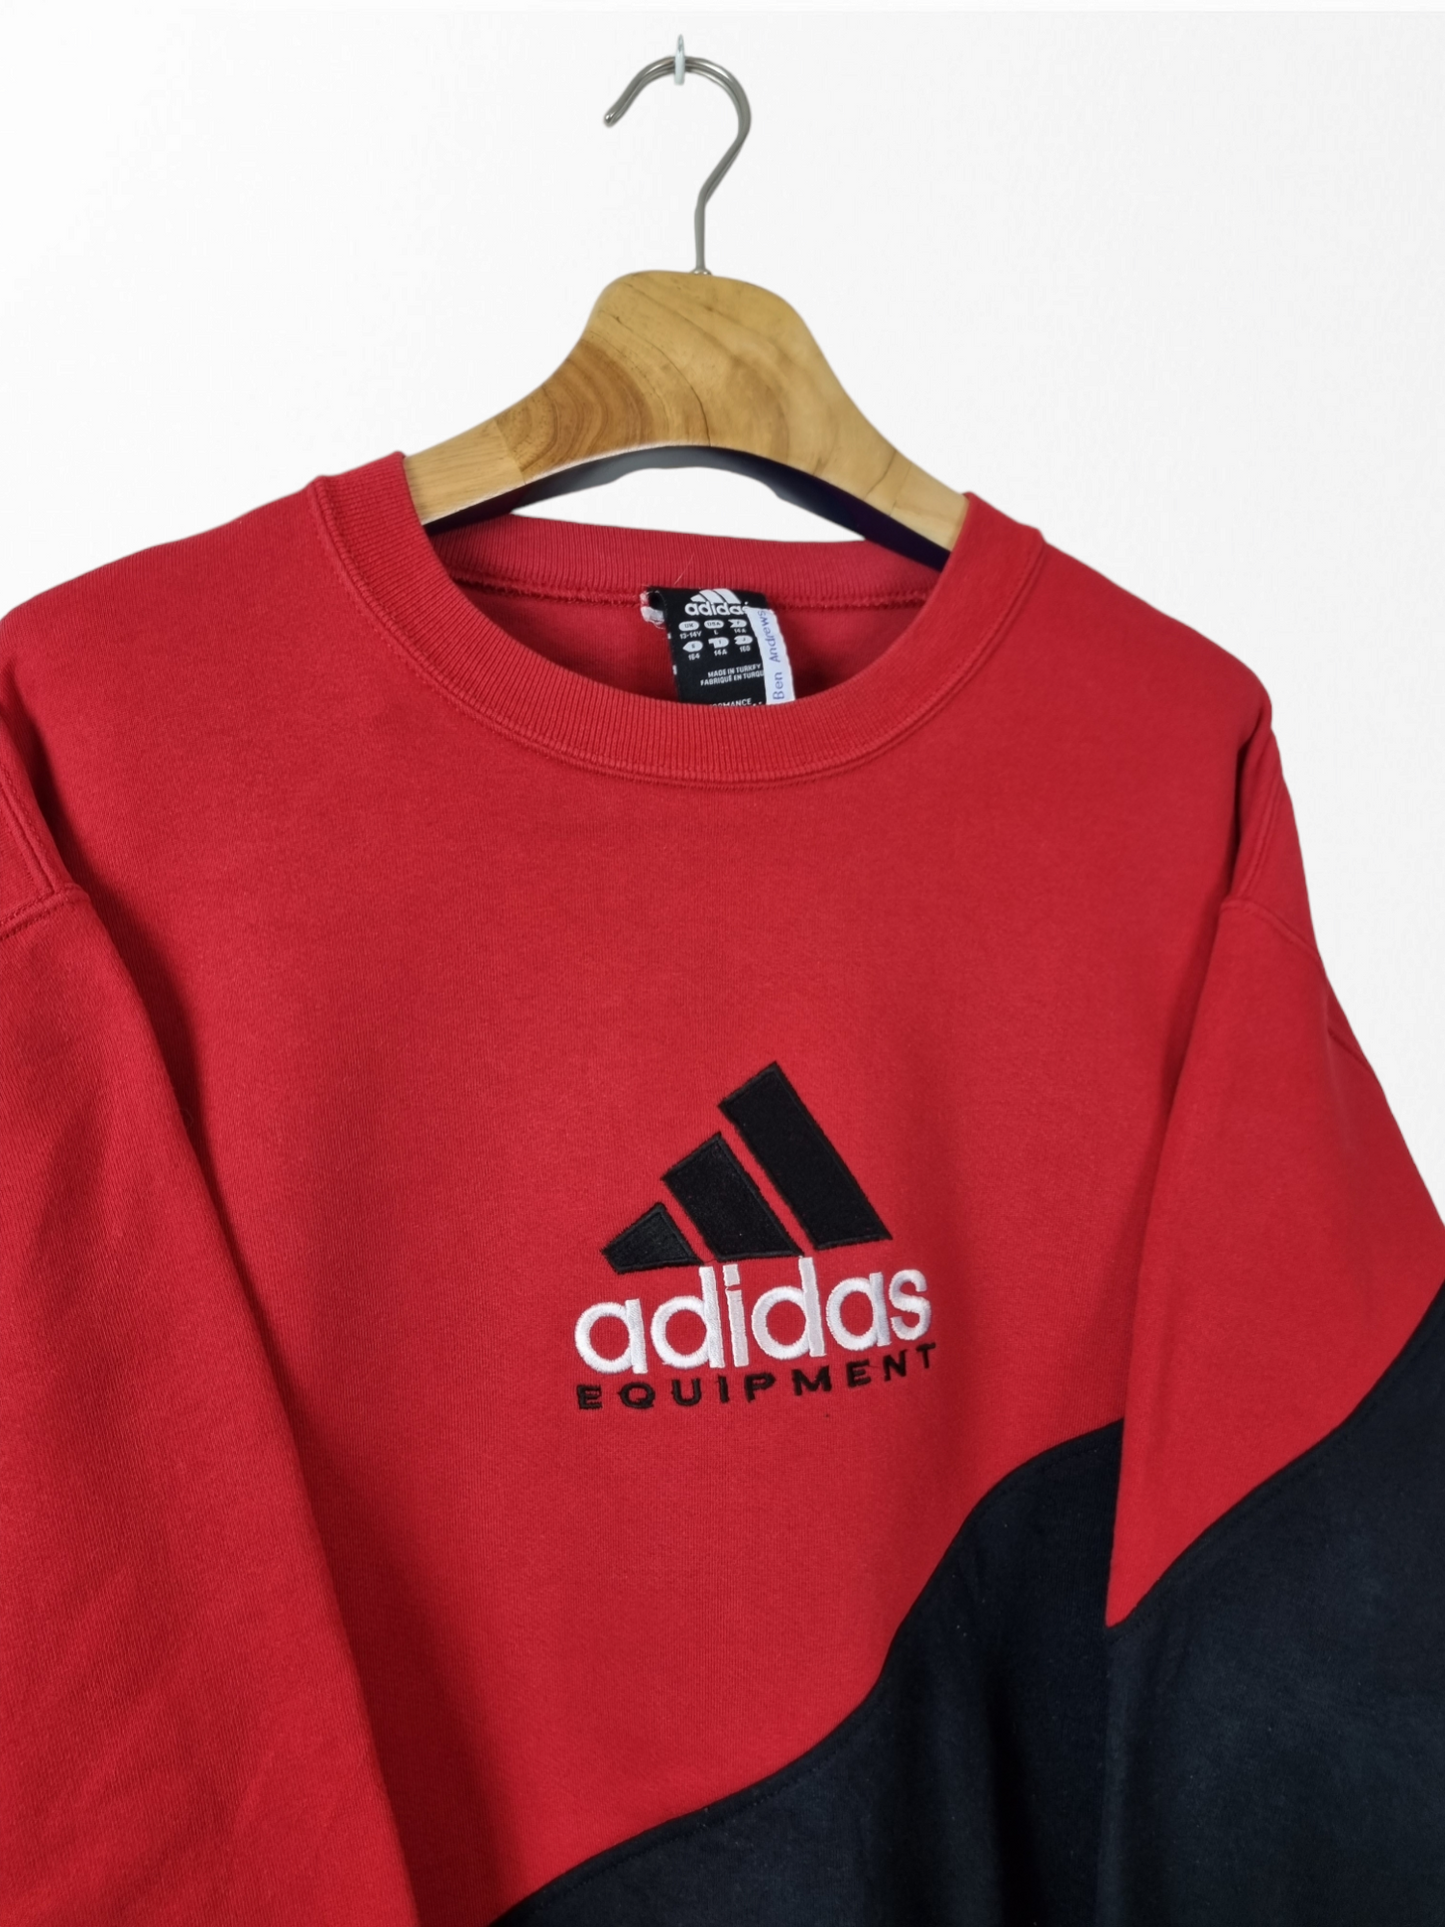 Adidas equipment sweater maat M/L